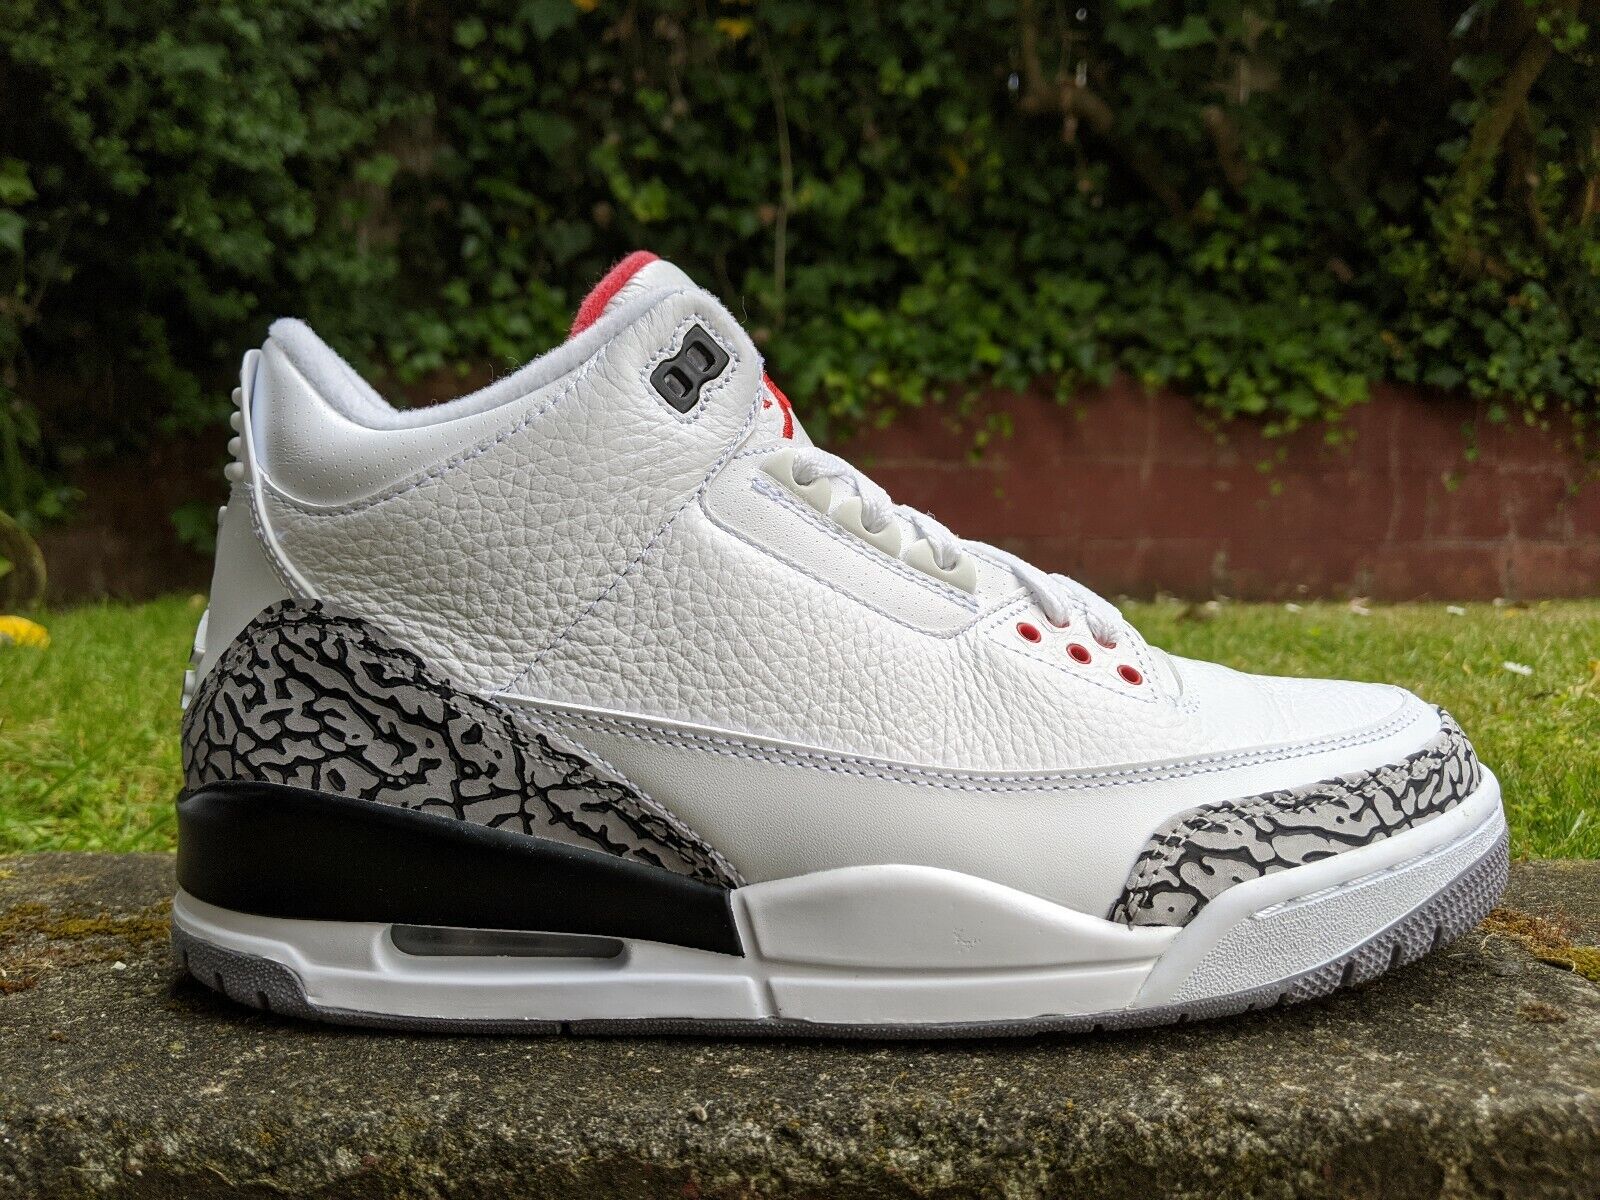 Jordan 3 White Cement, the Sneaker Michael Jordan Envisioned | eBay